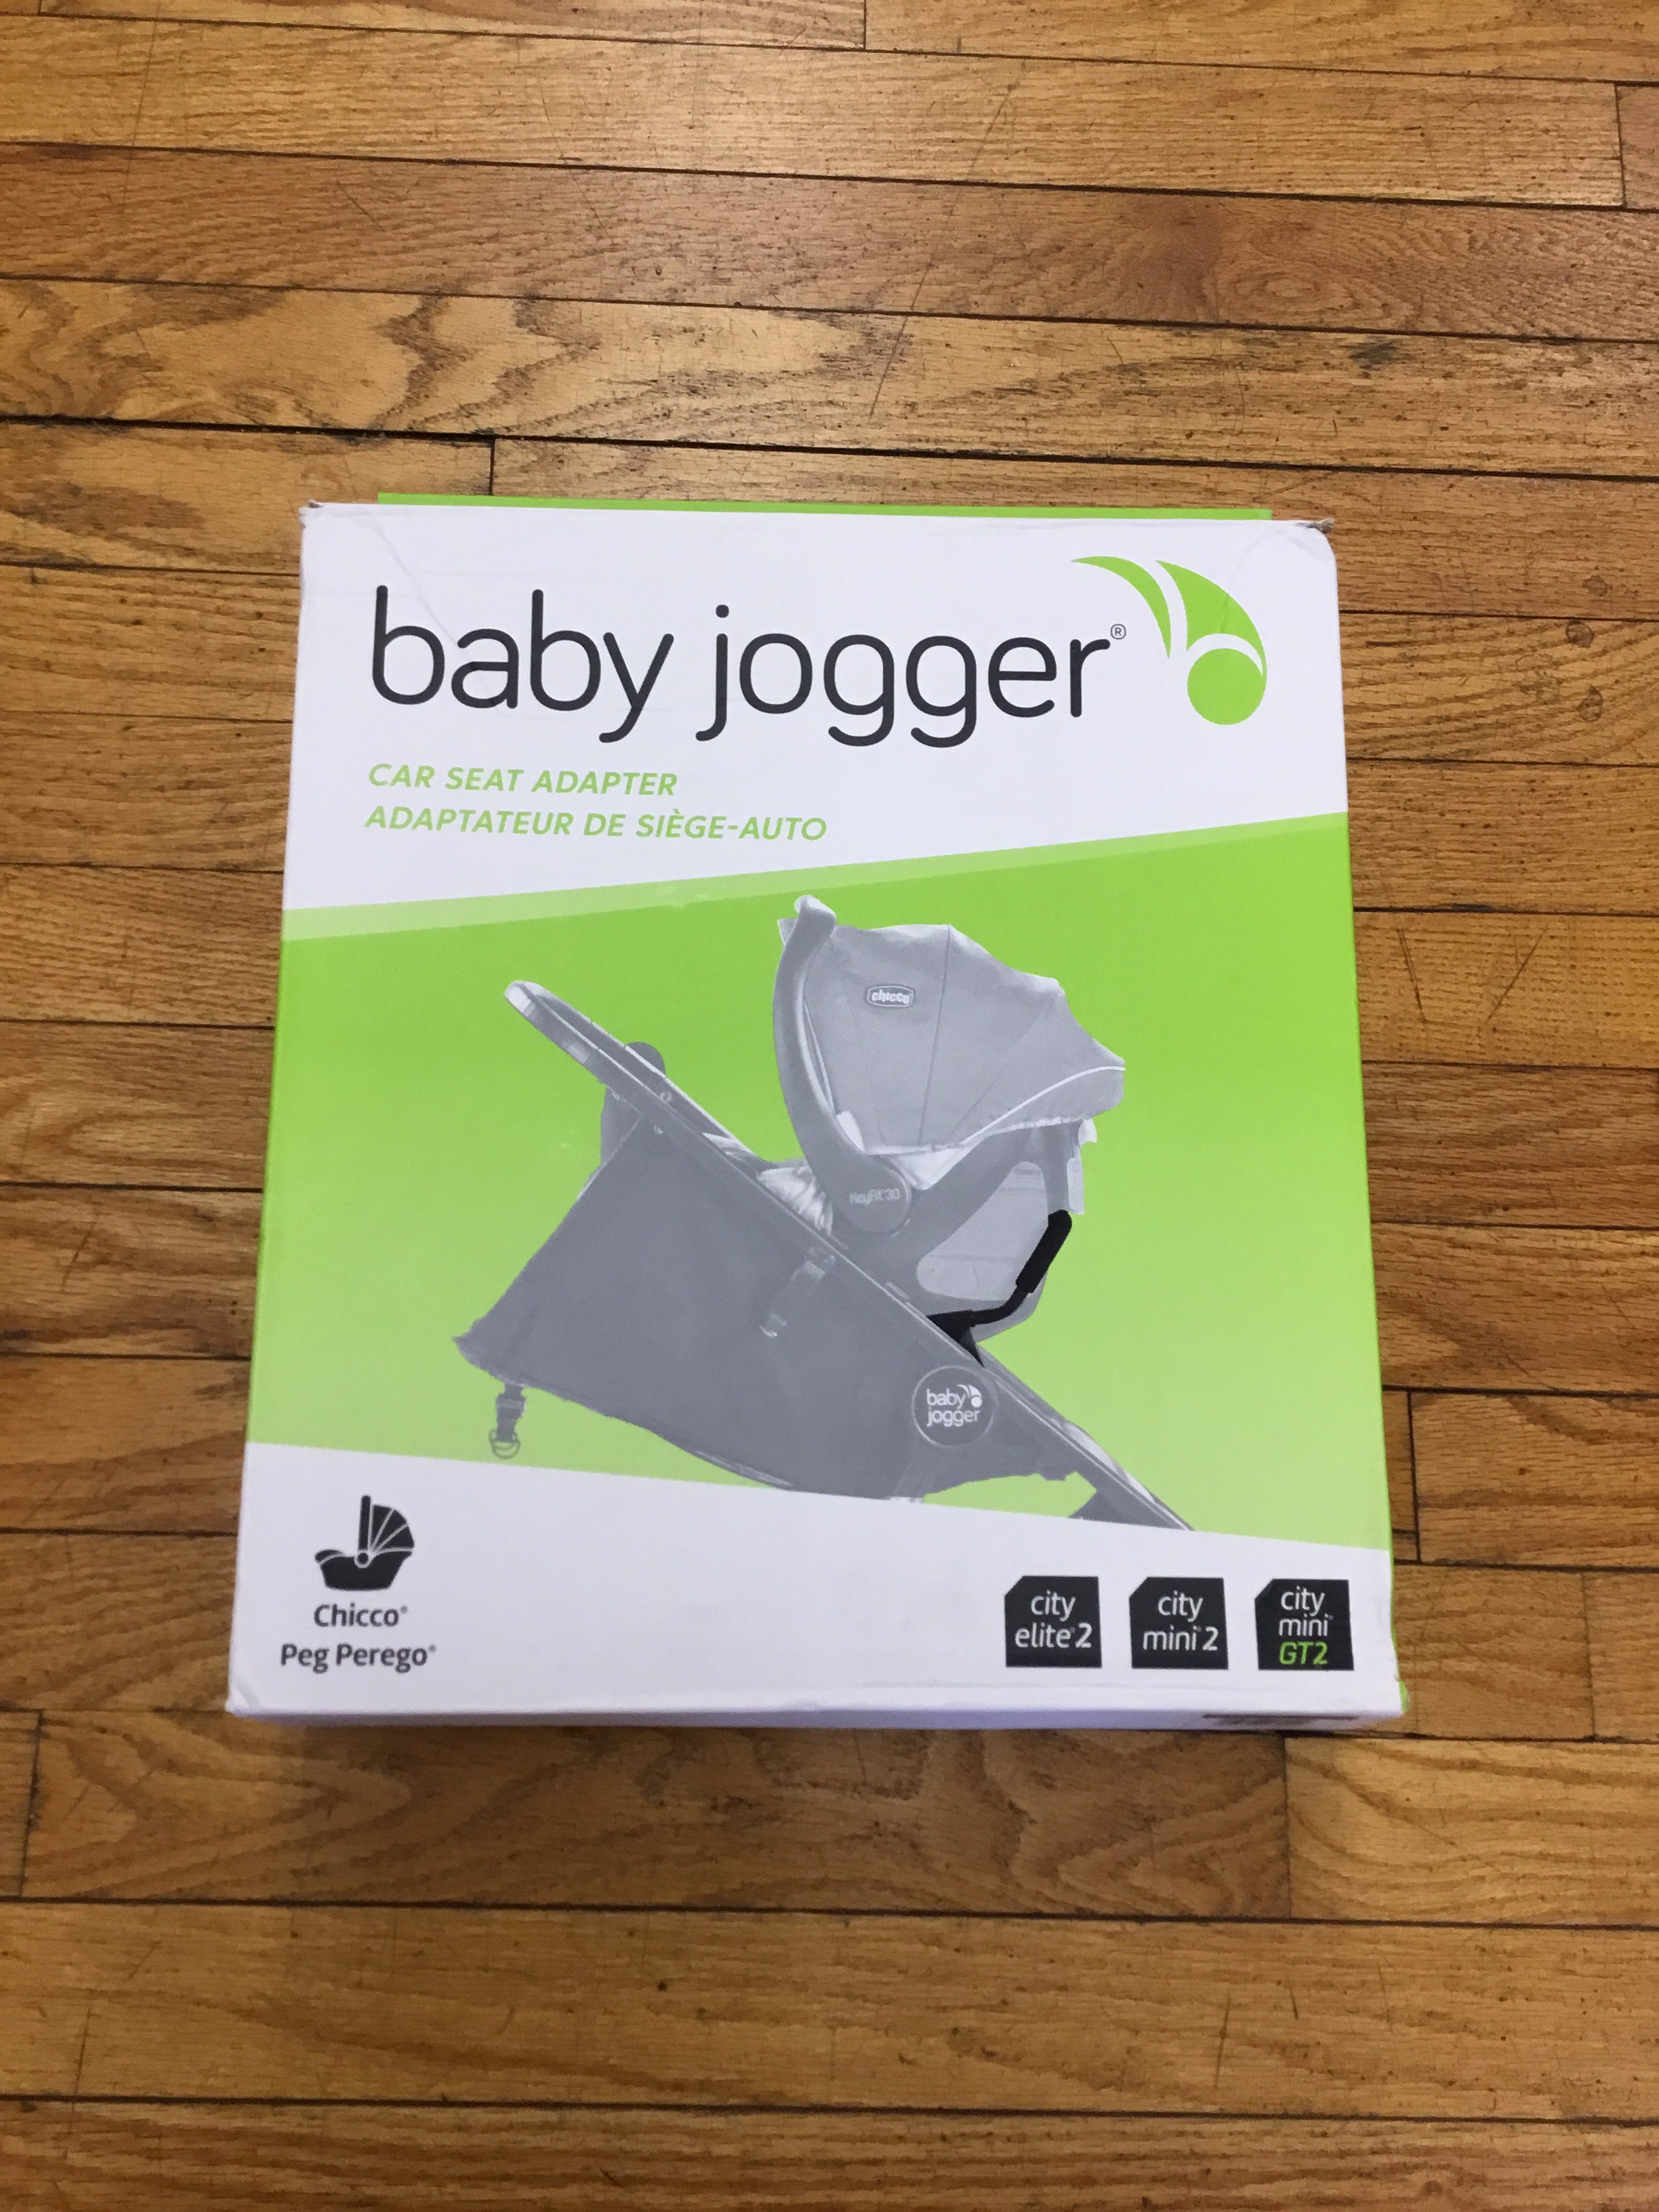 Baby Jogger Car Seat Adaptor For City Elite 2, City Mini 2 or City Mini GT2